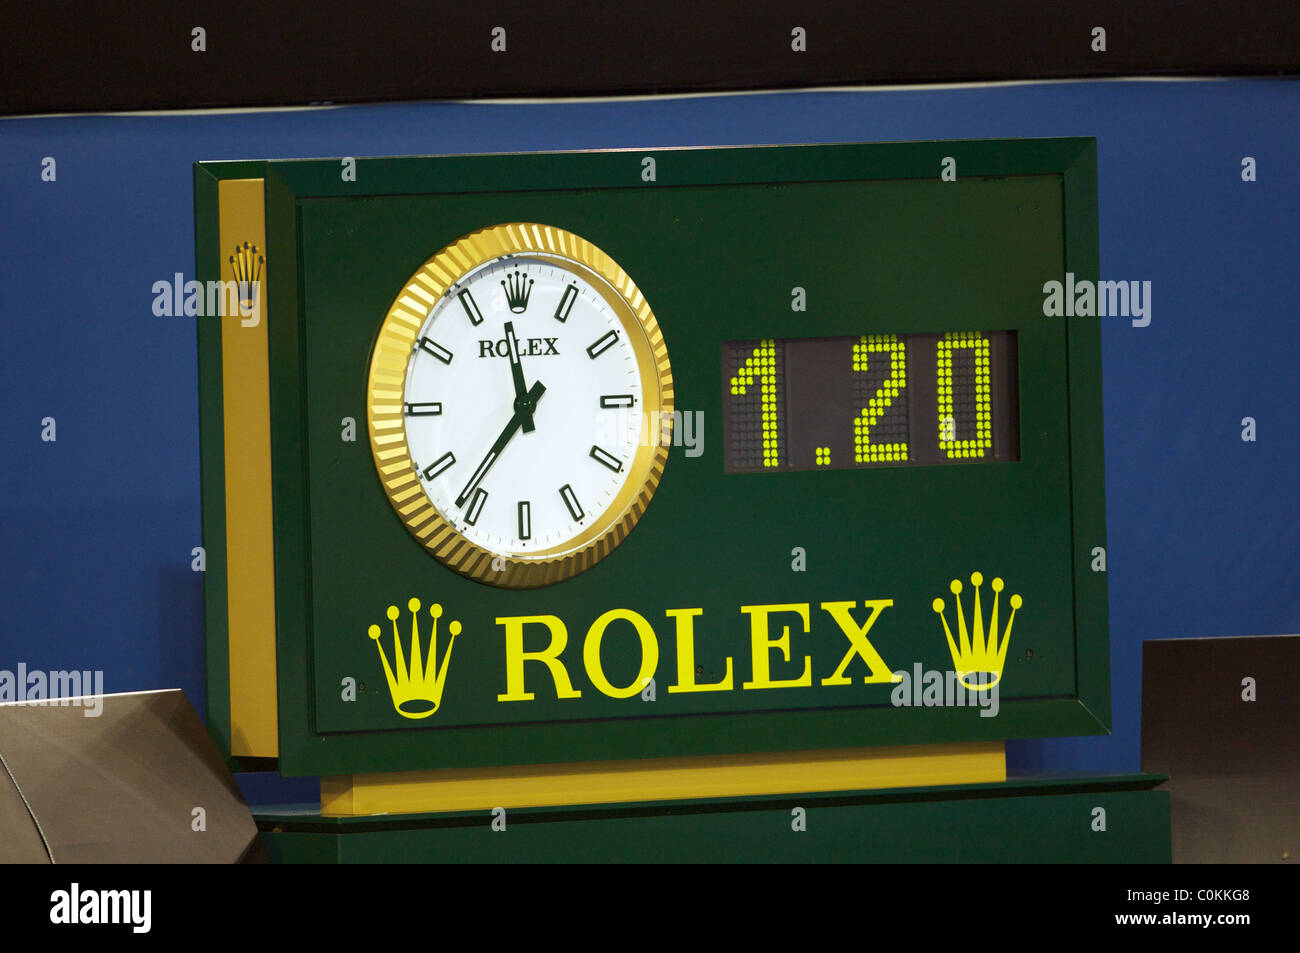 rolex timer